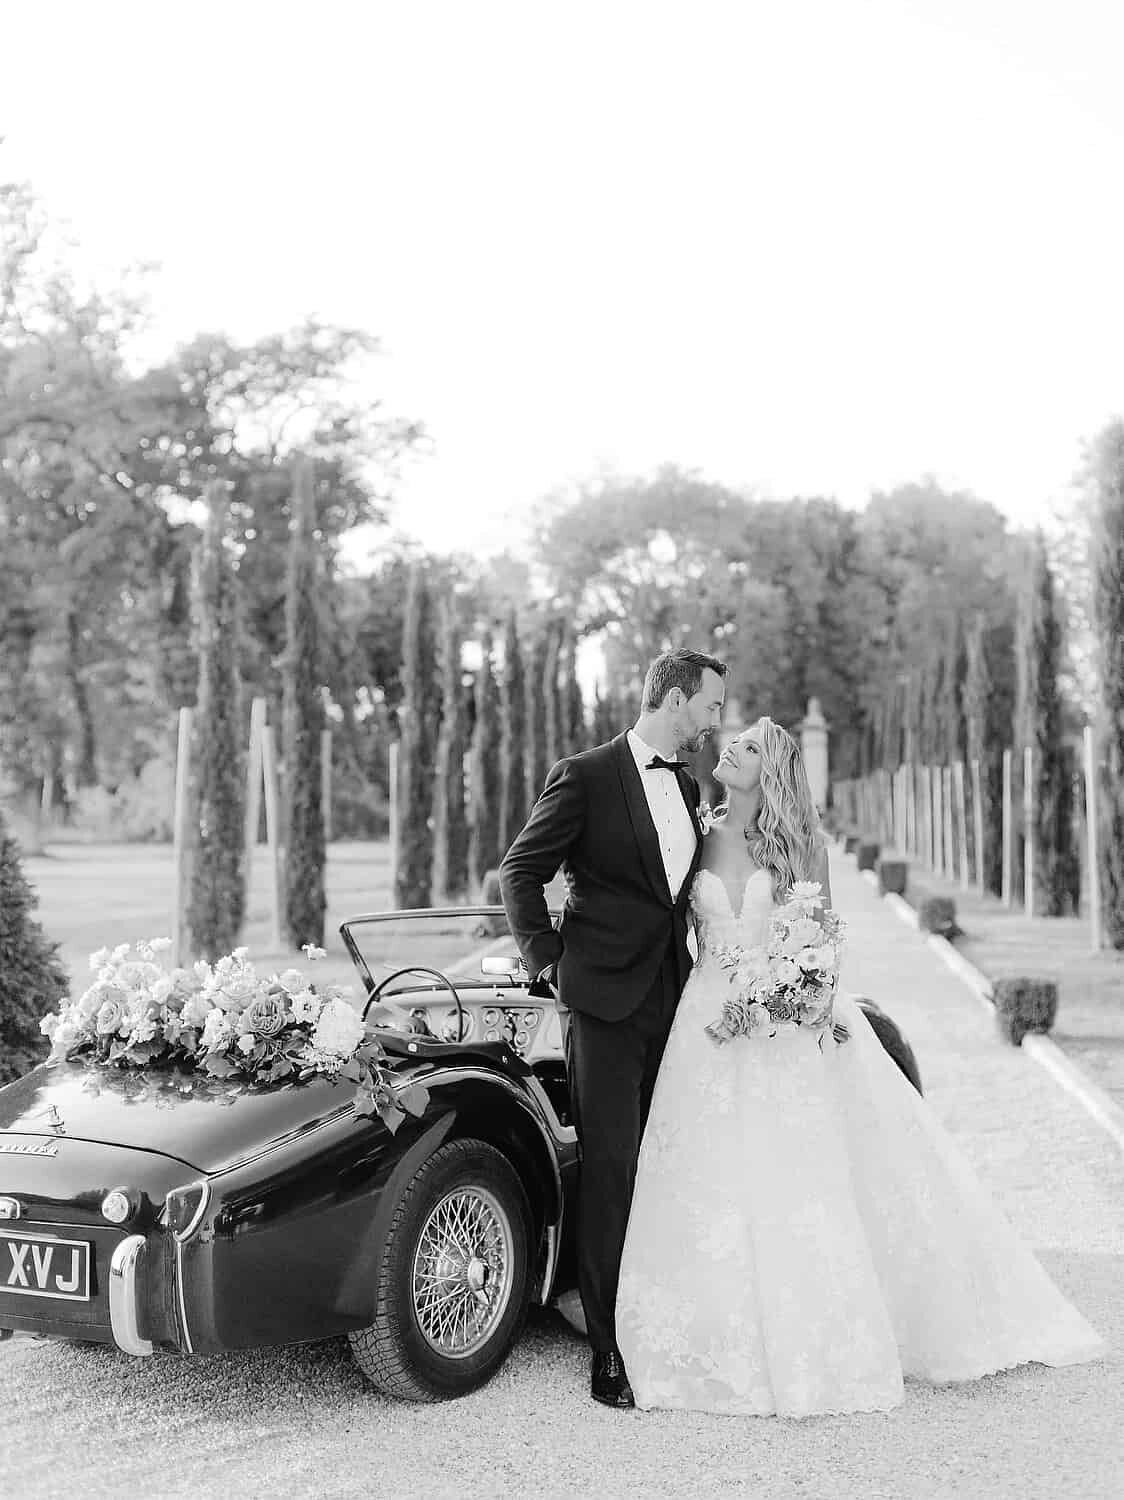 Chateau-de-Tourreau-France-wedding-by-Julia-Kaptelova_Photography-0456_1